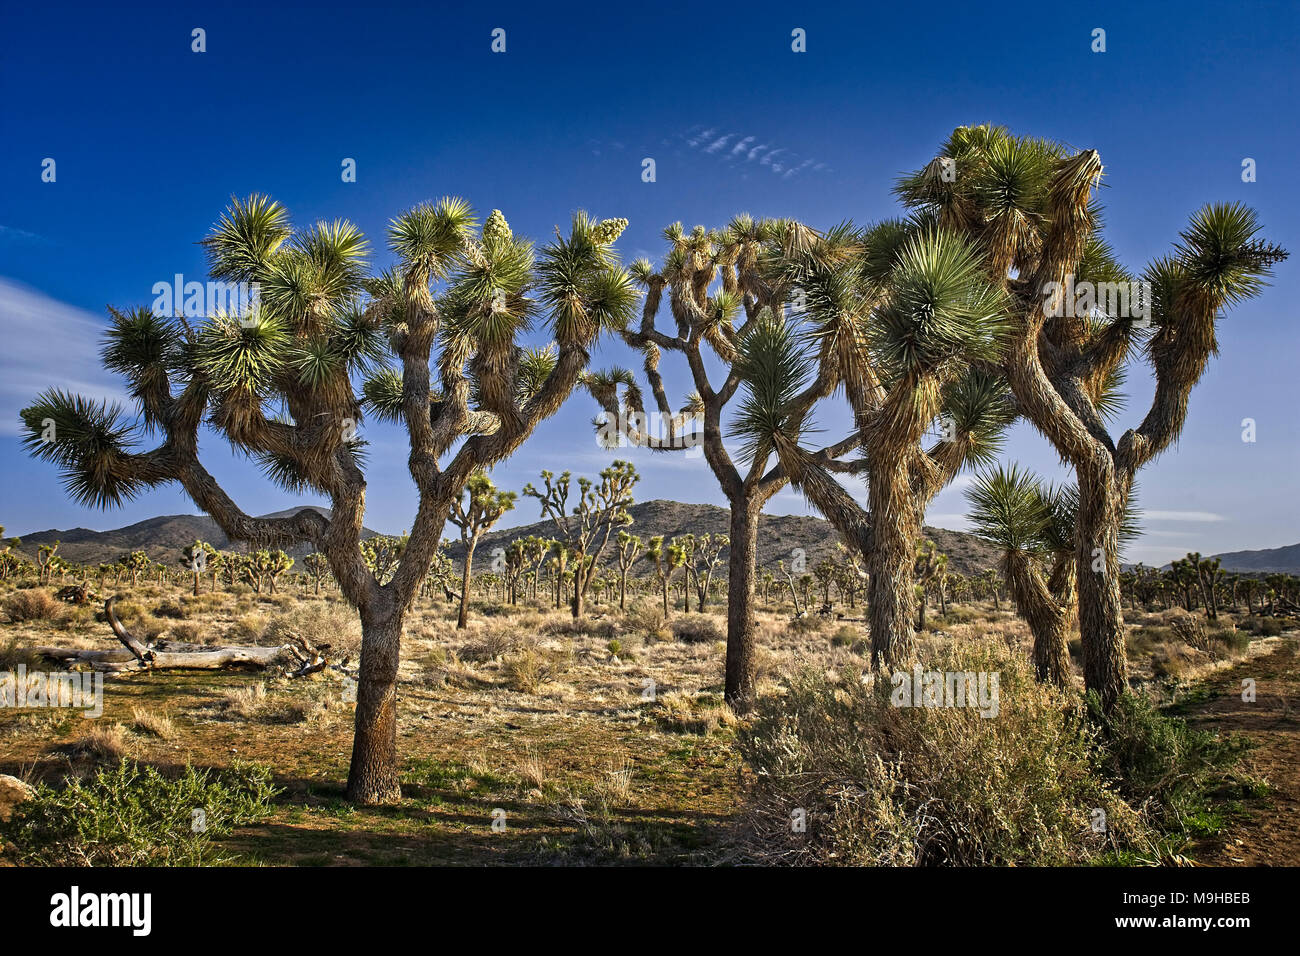 Joshua trees in the desert landscape found in Joshua Tree National Park in Southern California's Mojave Desert Stock Photo